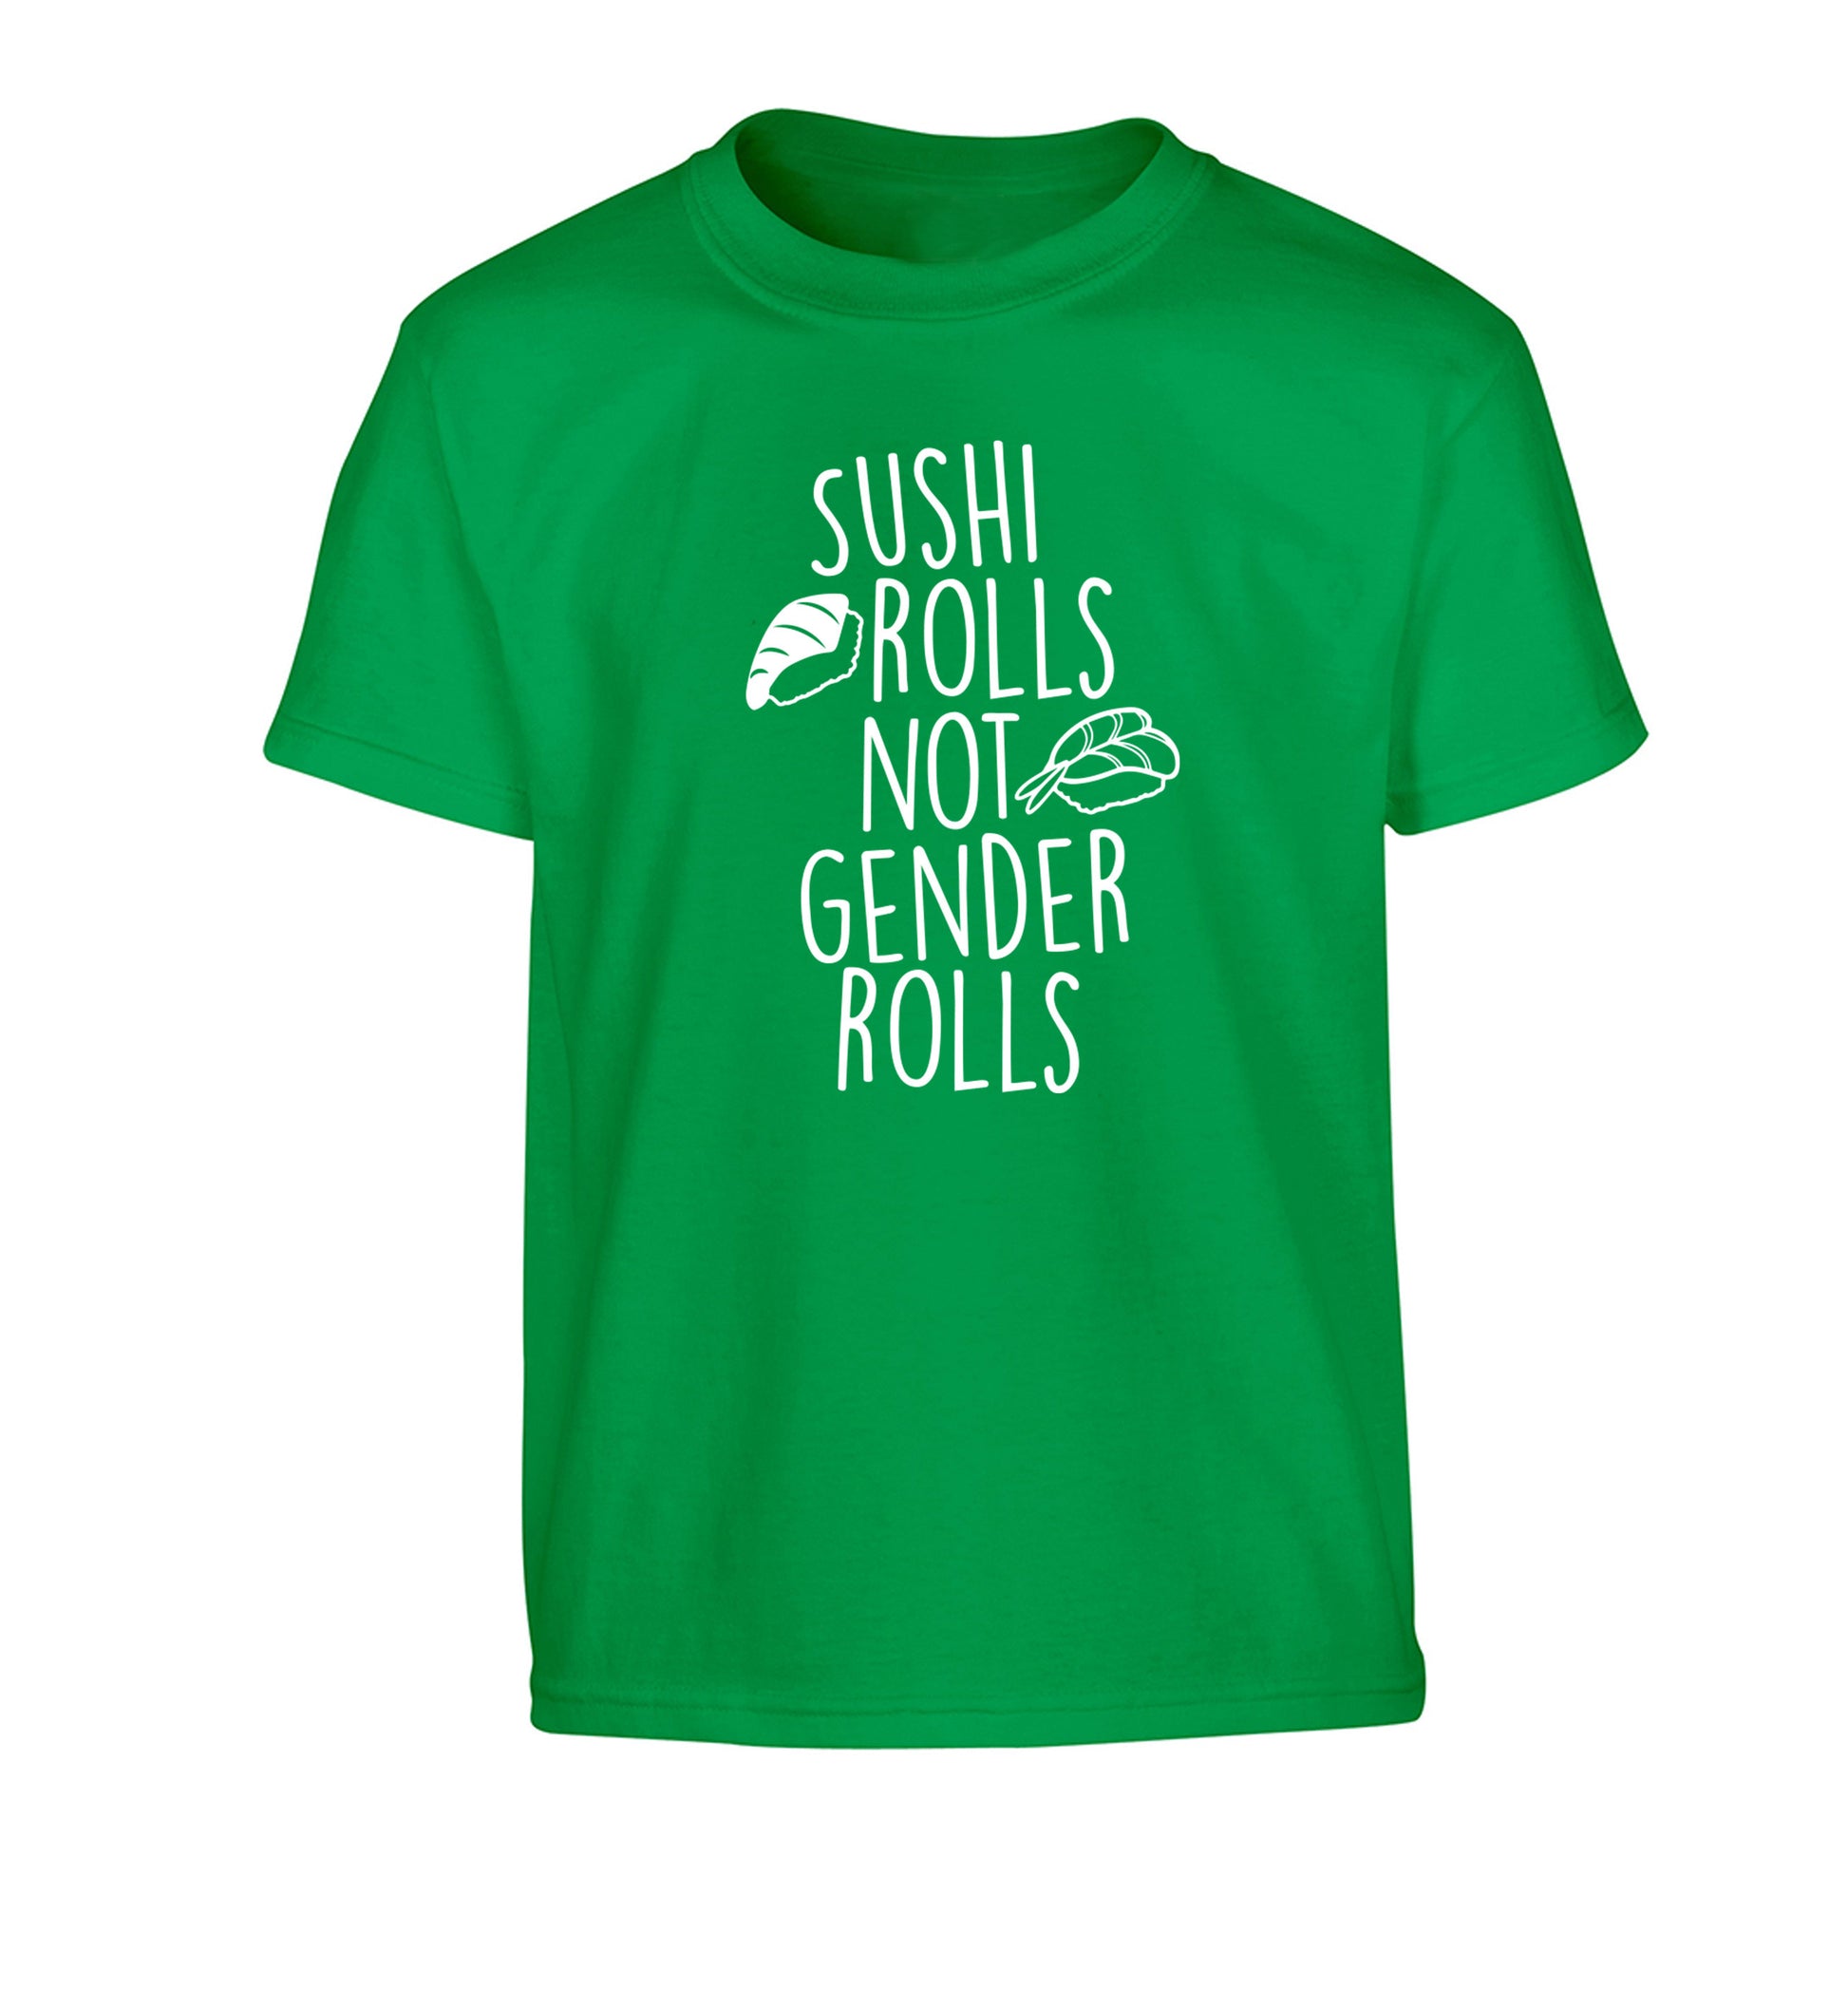 Sushi rolls not gender rolls Children's green Tshirt 12-14 Years